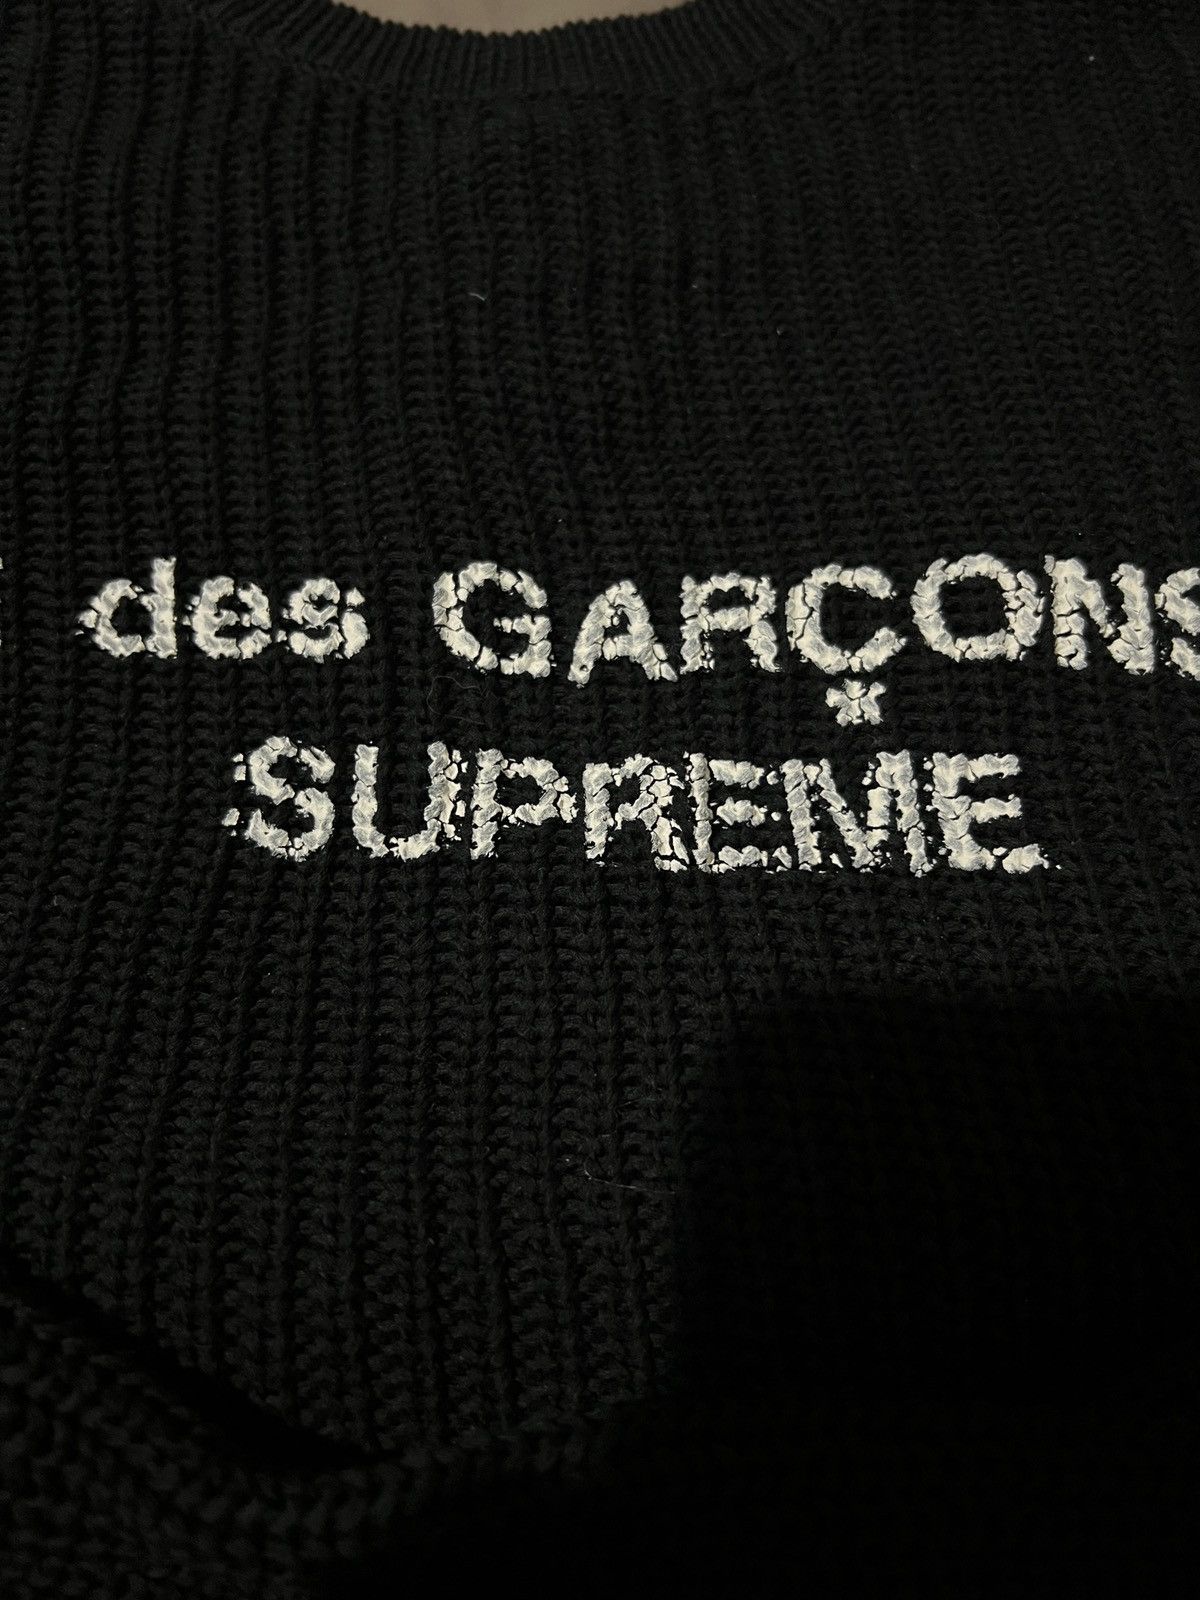 Supreme Supreme Comme des Garcons SHIRT Sweater | Grailed